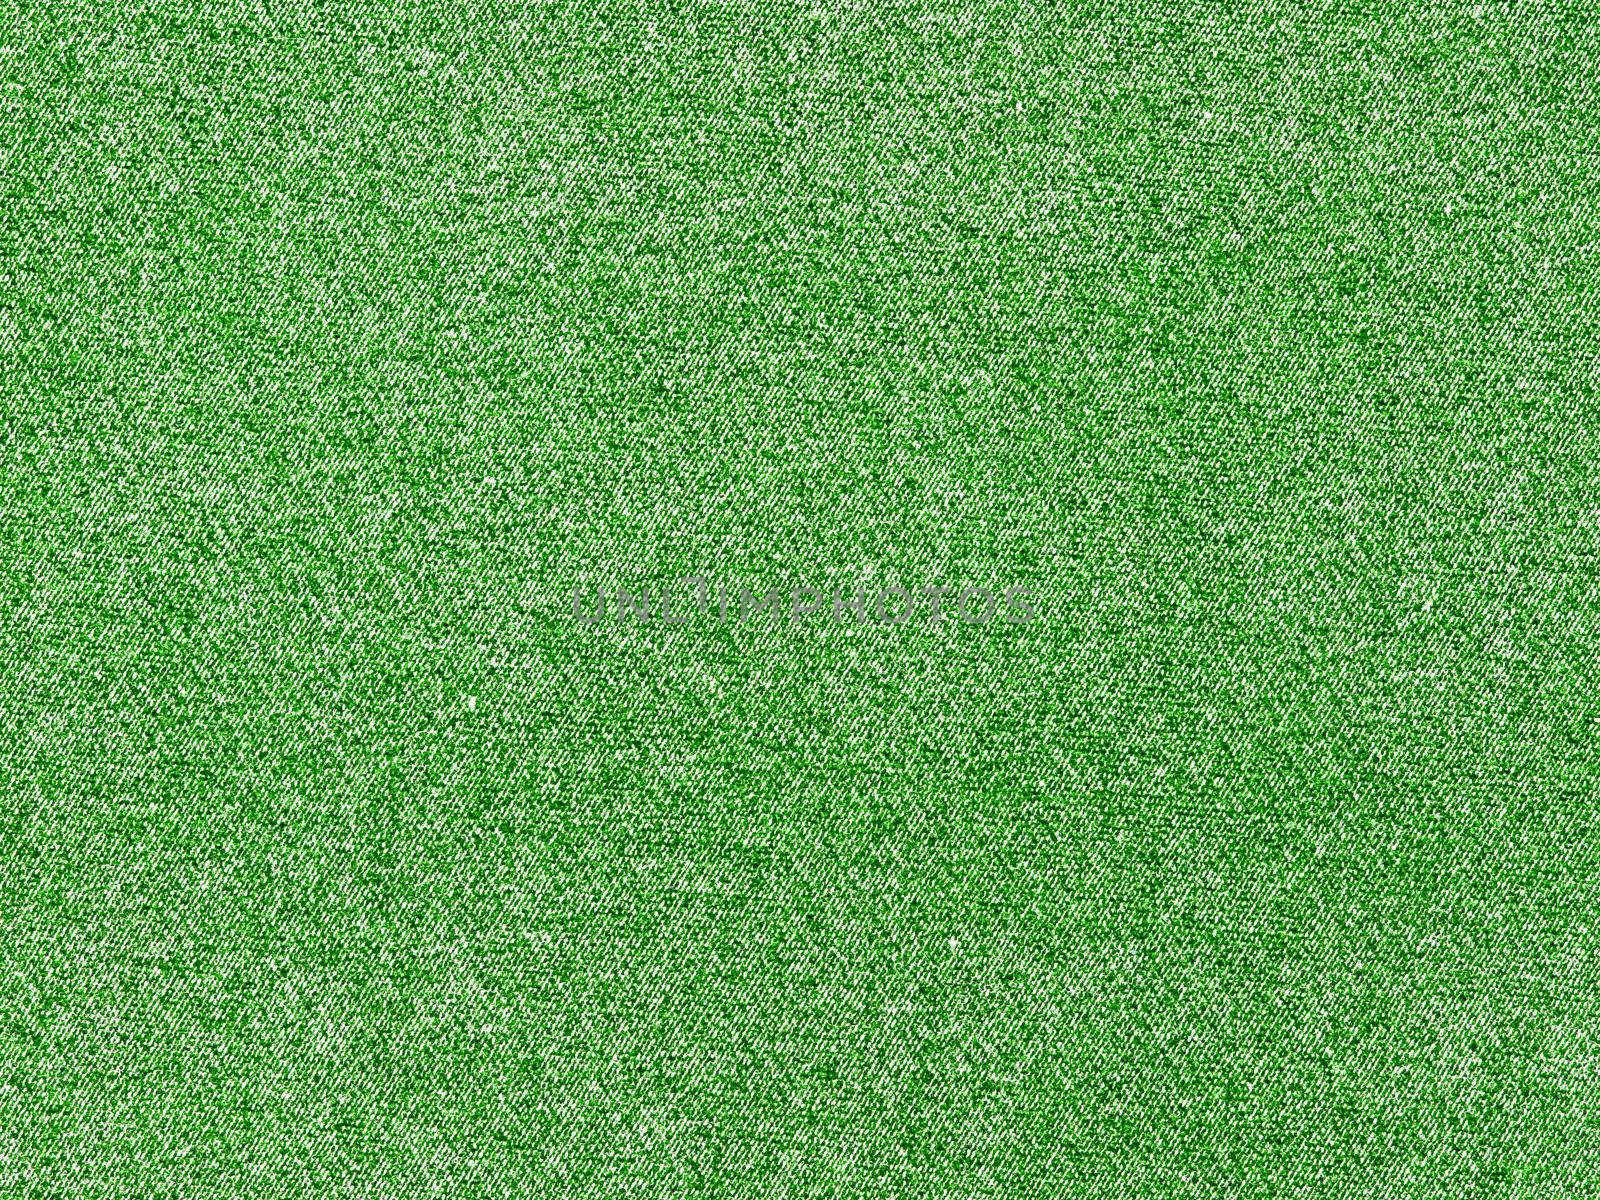 Full Frame Background of a Green Denim Fabric Pattern